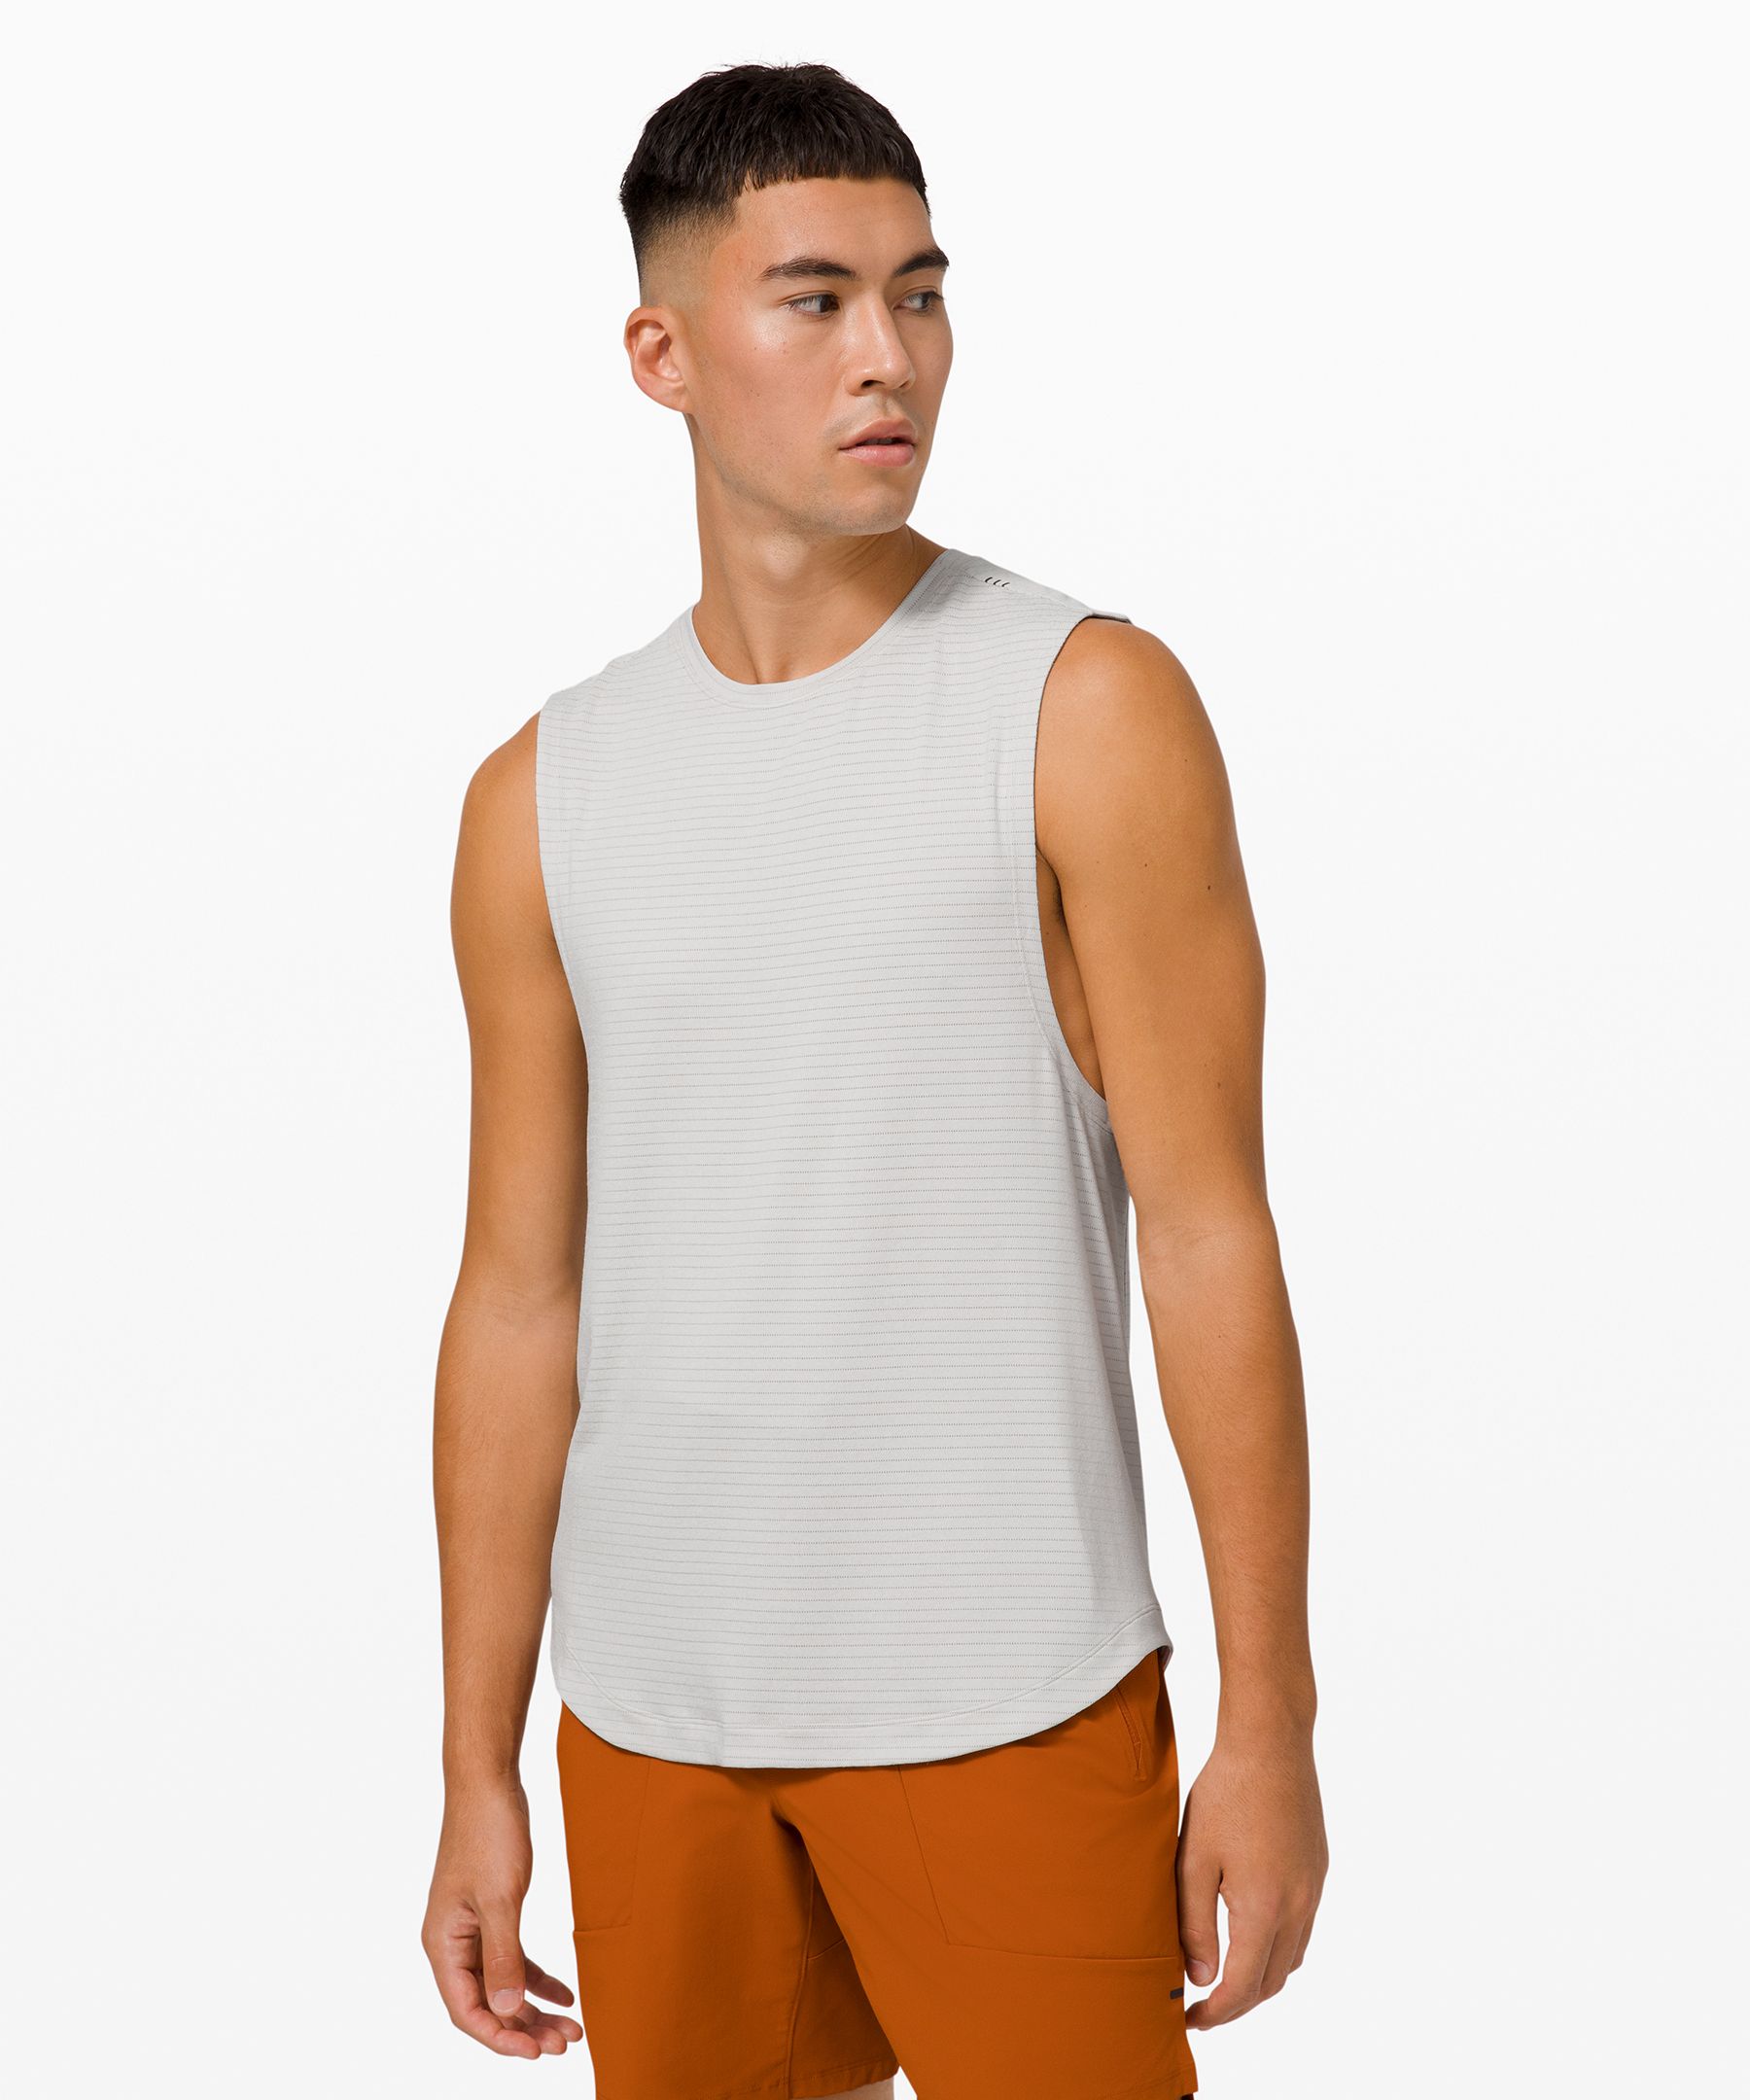 lululemon mens sleeveless shirt